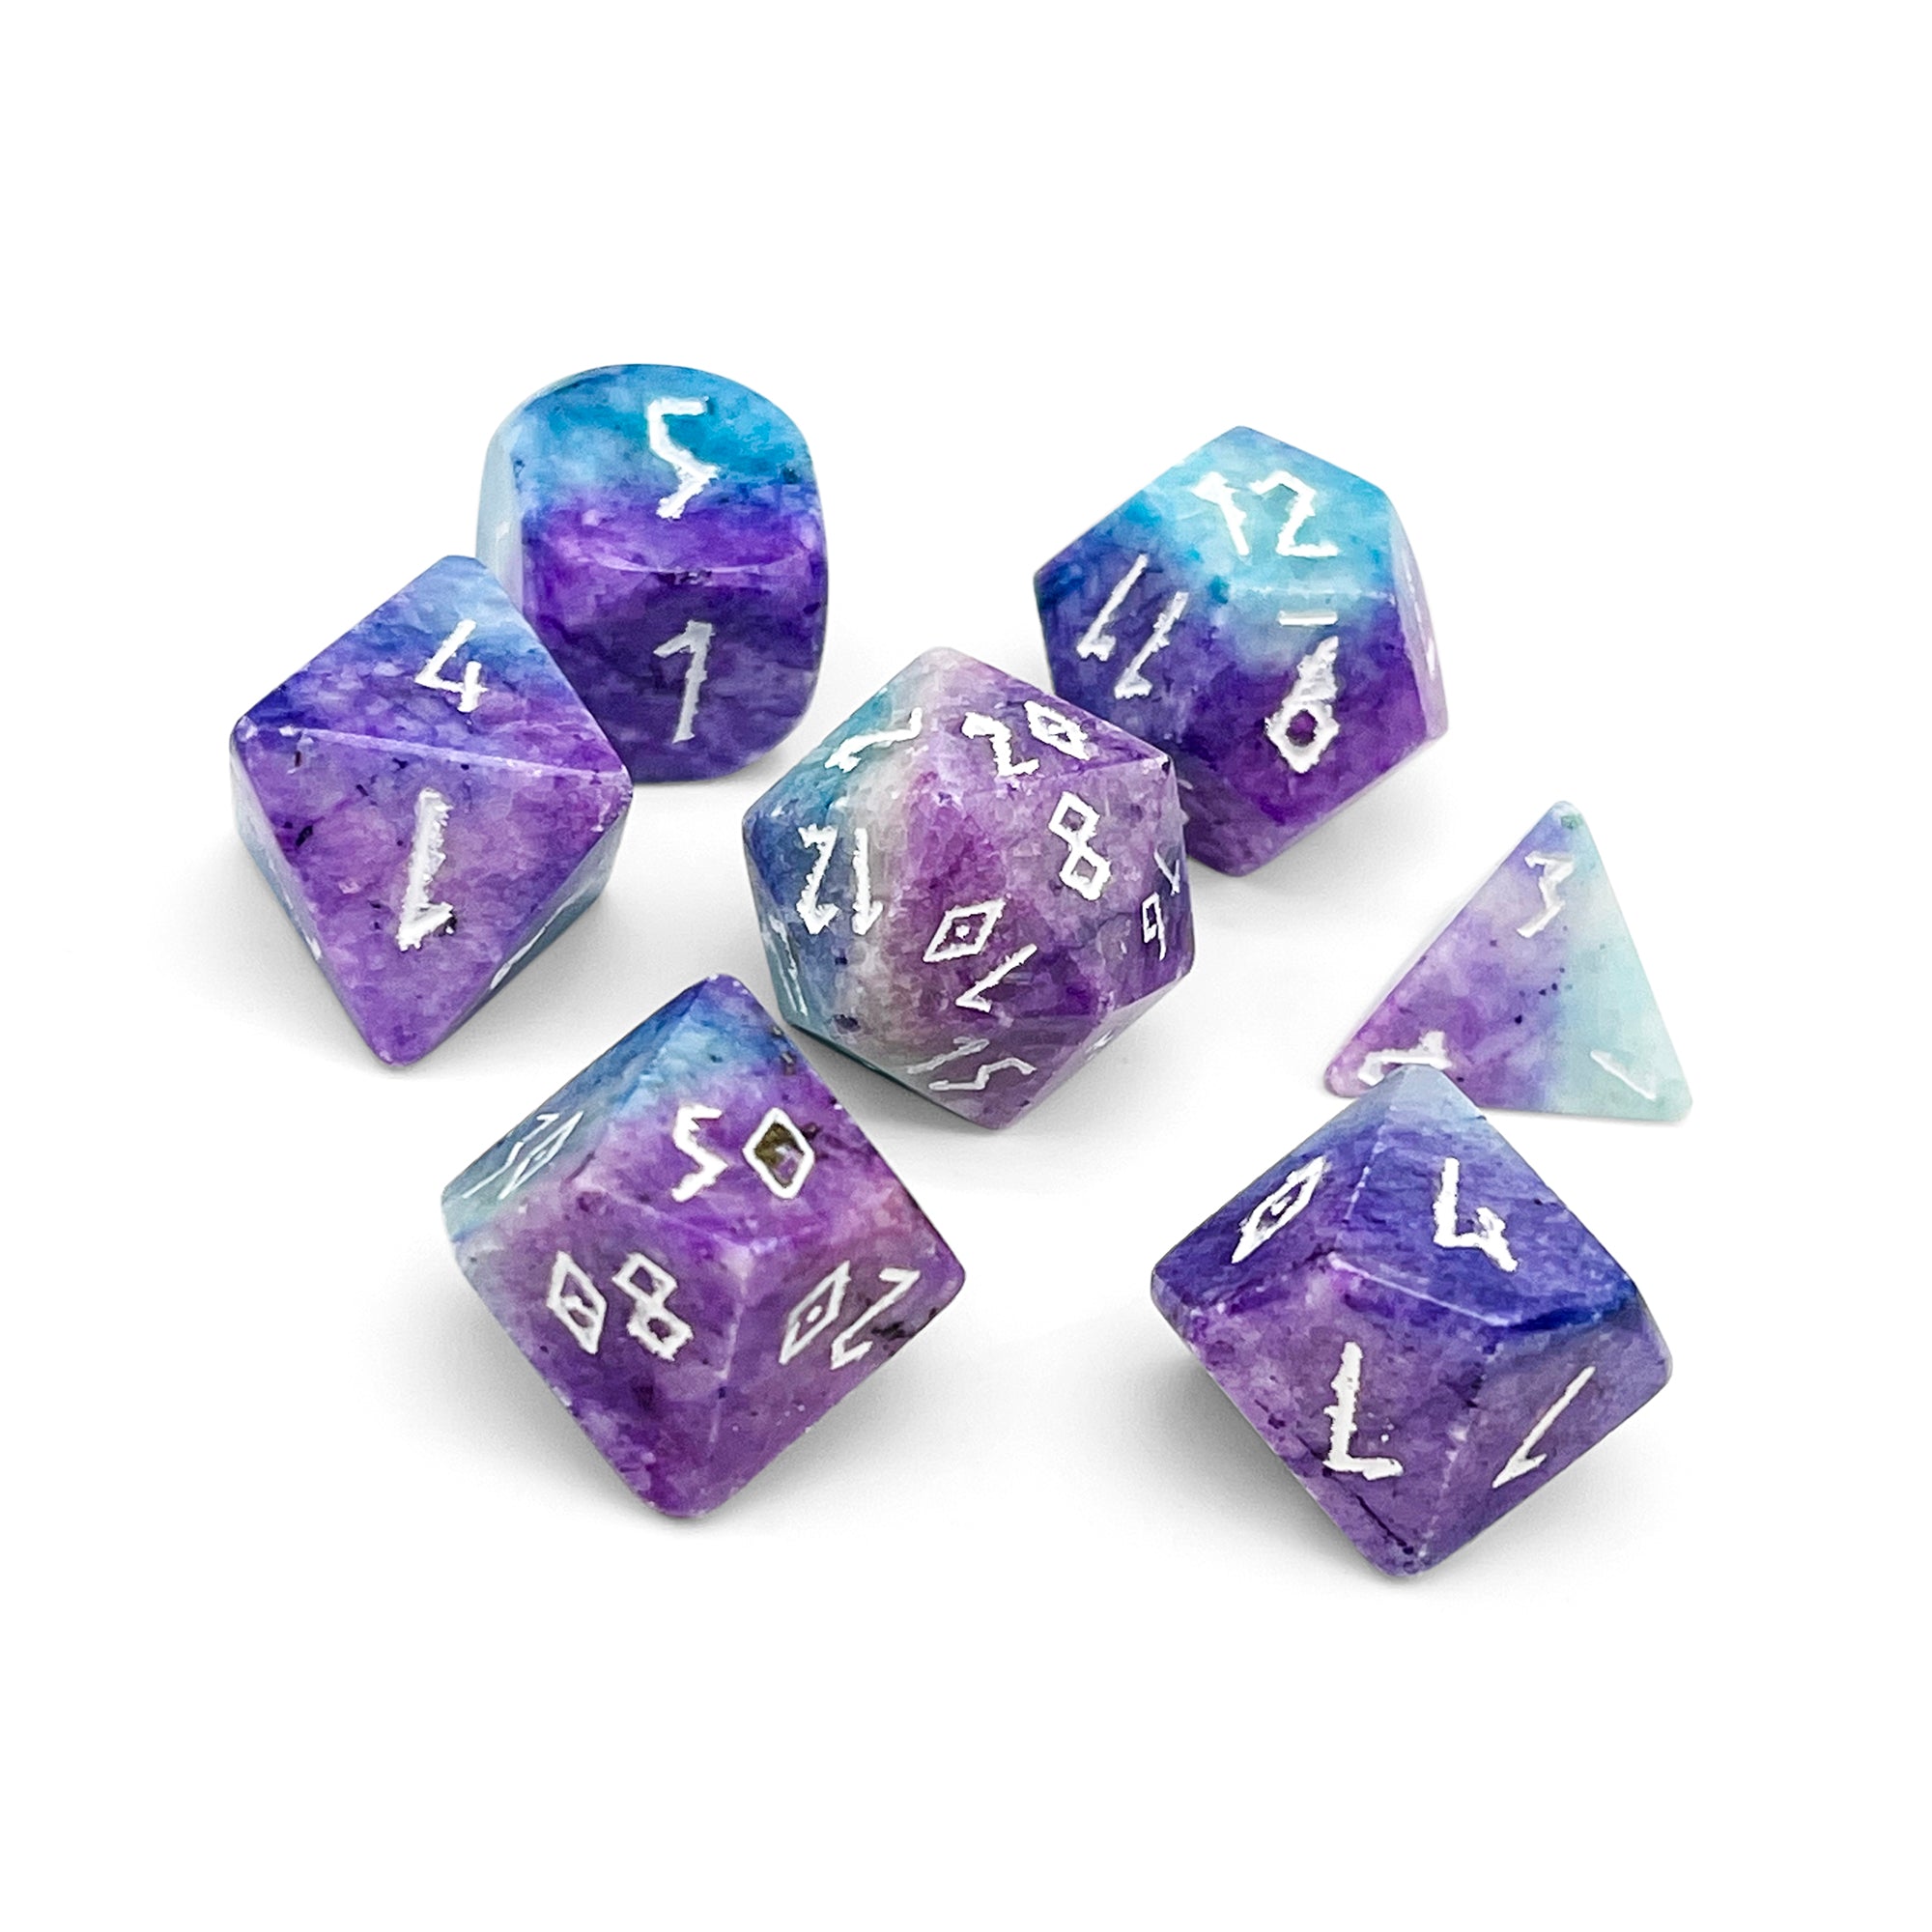 Blue/Purple Barite - 7 Piece RPG Set Gemstone Dice